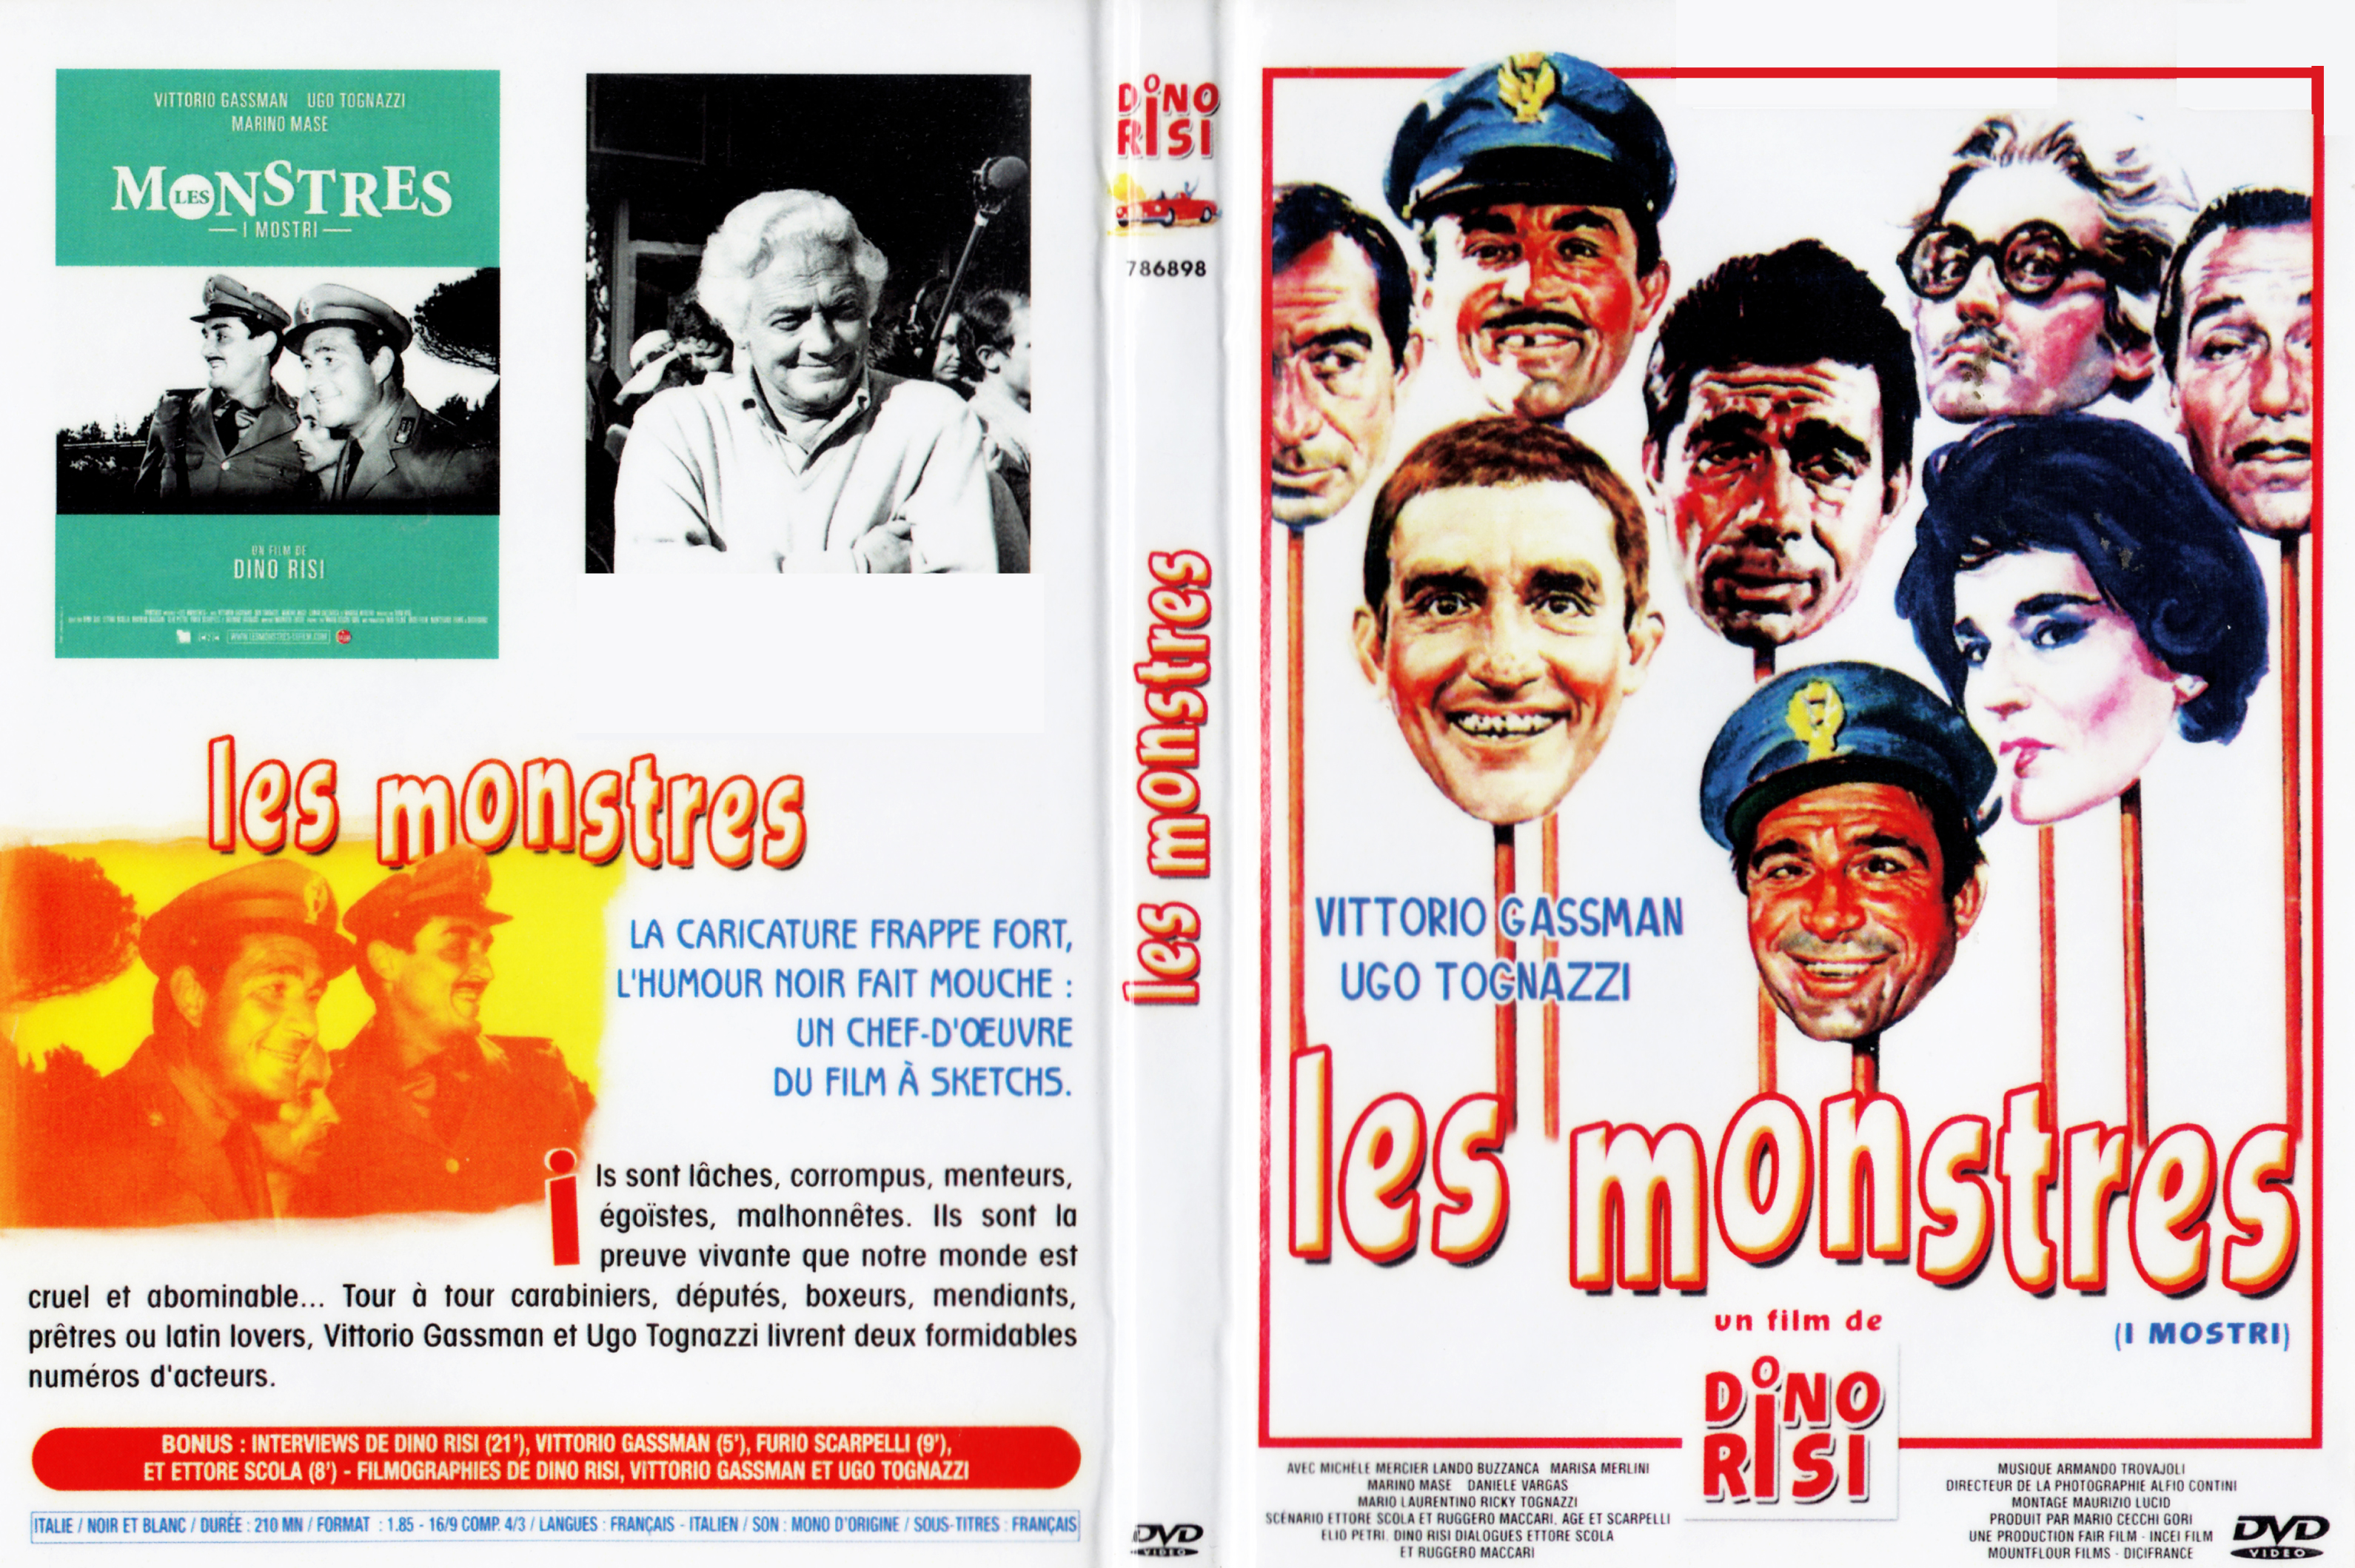 Jaquette DVD Les monstres v3